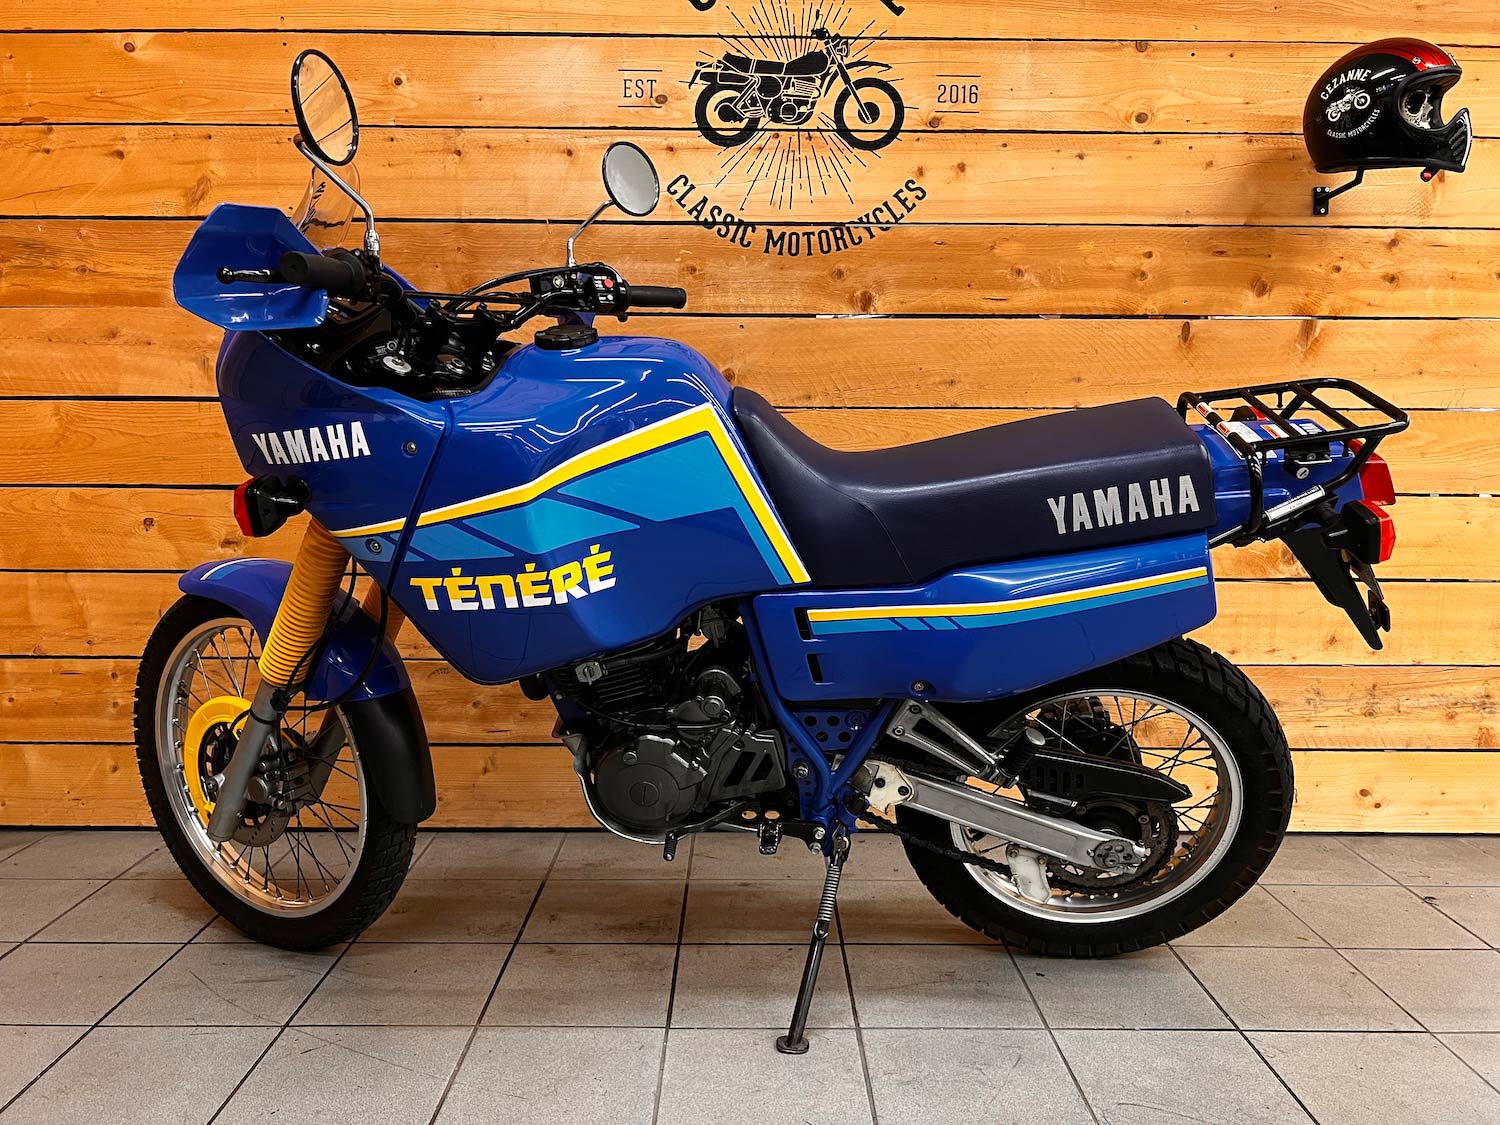 Yamaha_xt600z_Cezanne_classic_motorcycle_6-158.jpg